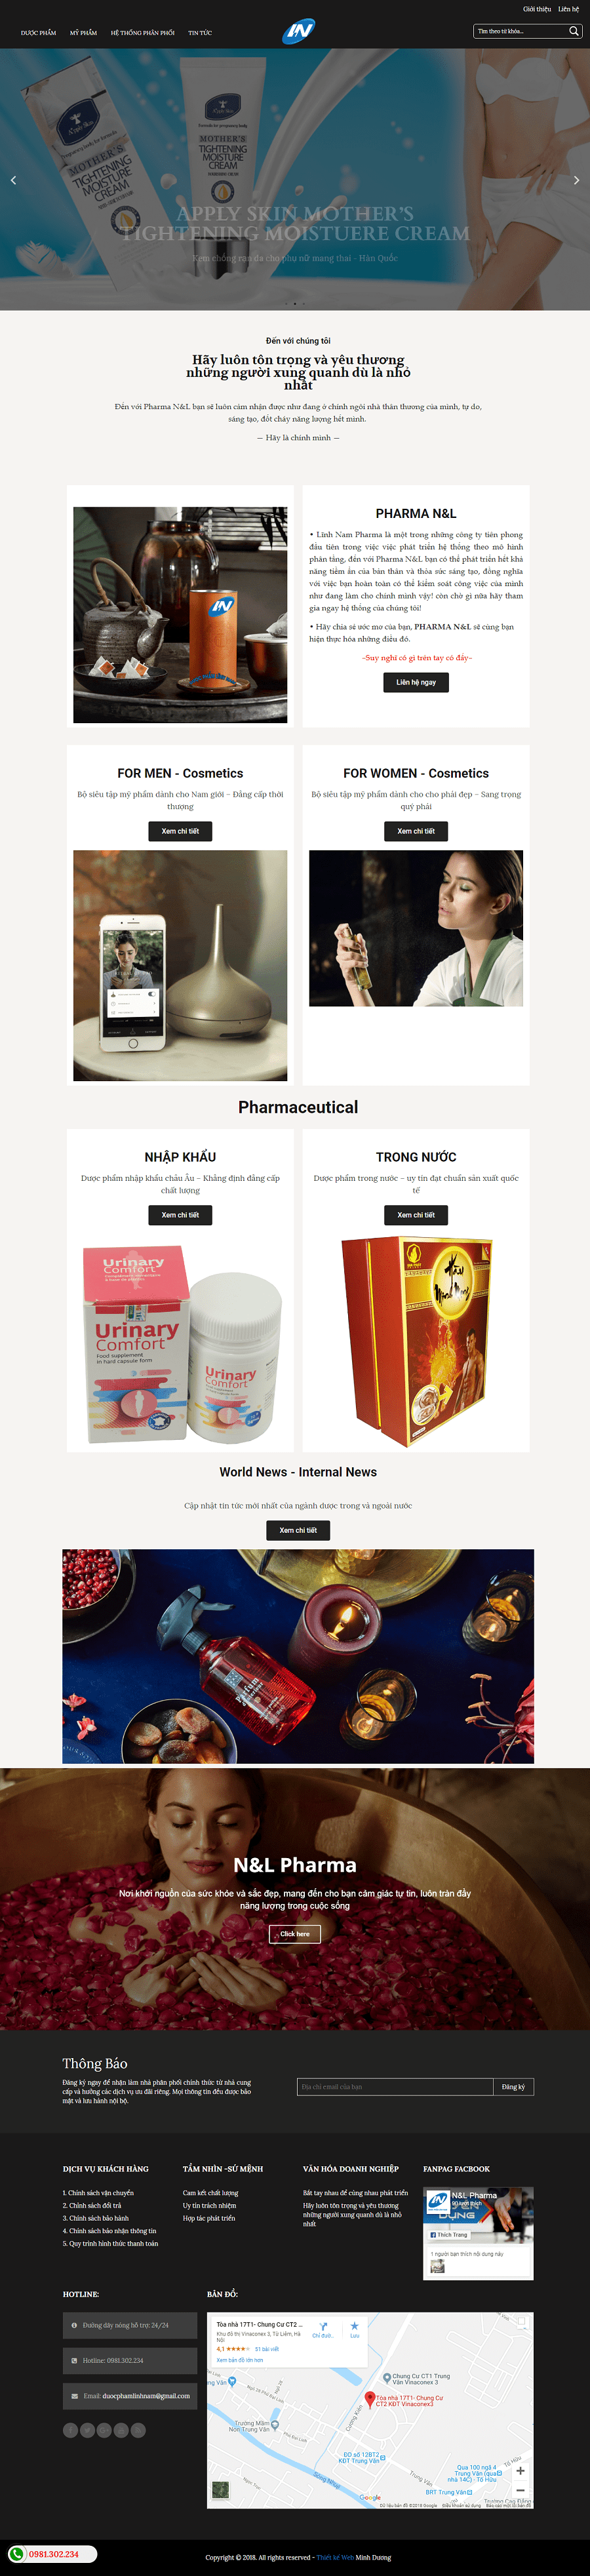 Website bán dược phẩm